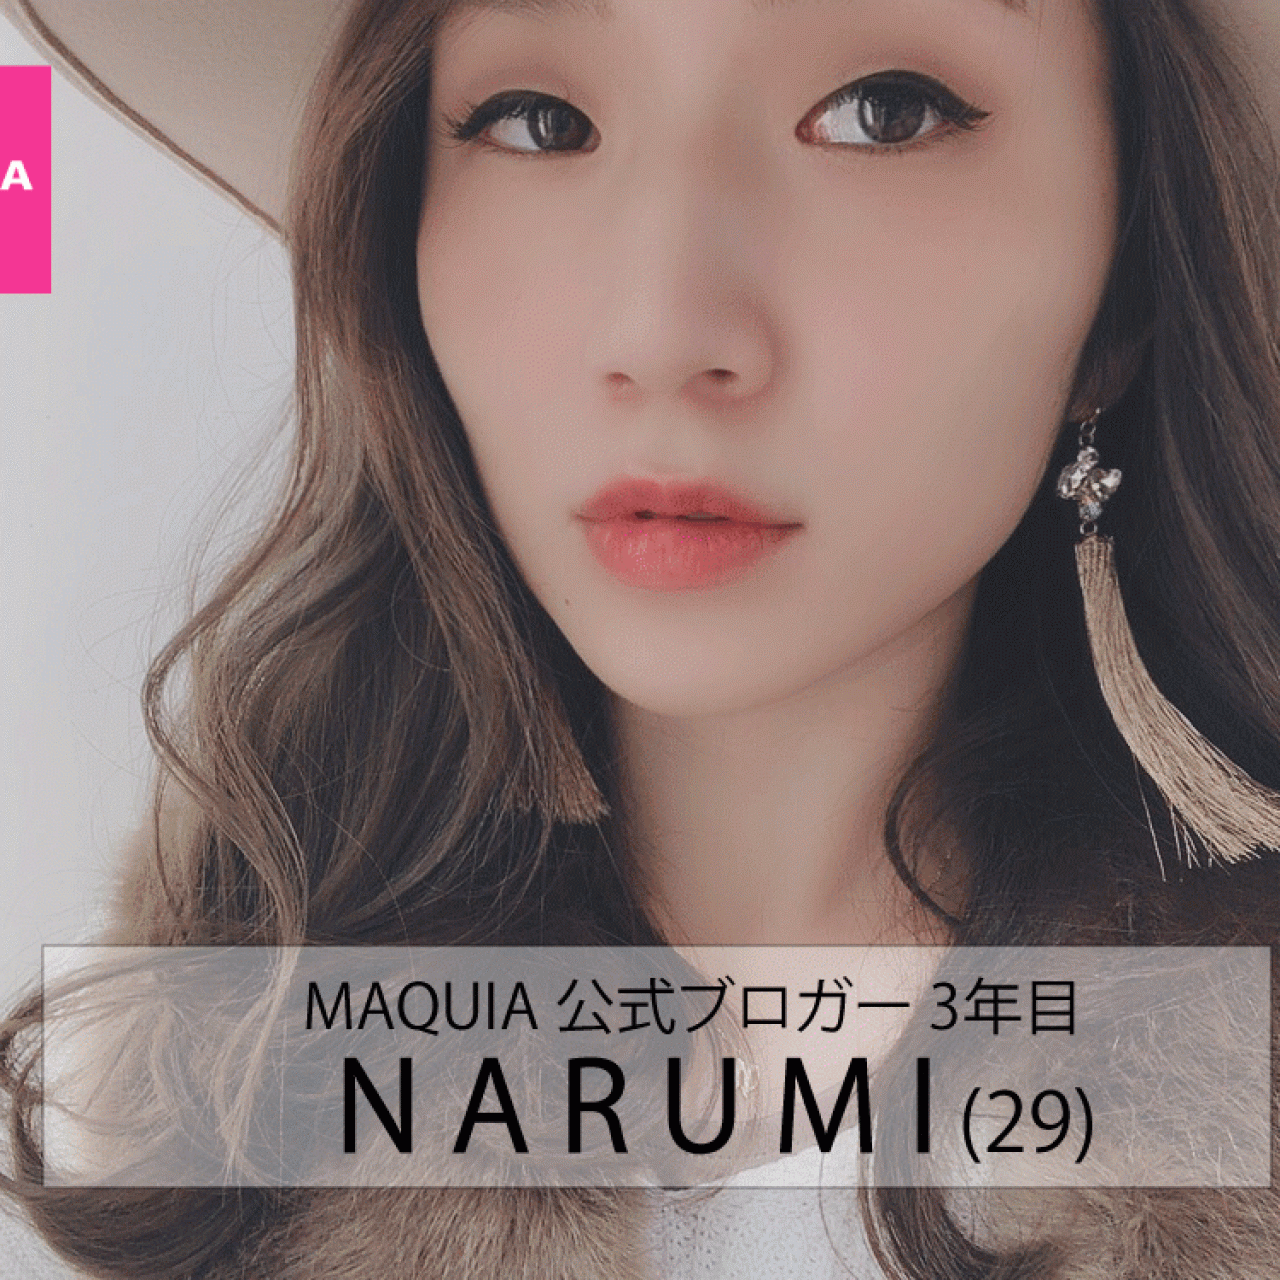 MAQUIA公式ブロガー3年目《NARUMI》のプロフィール♡